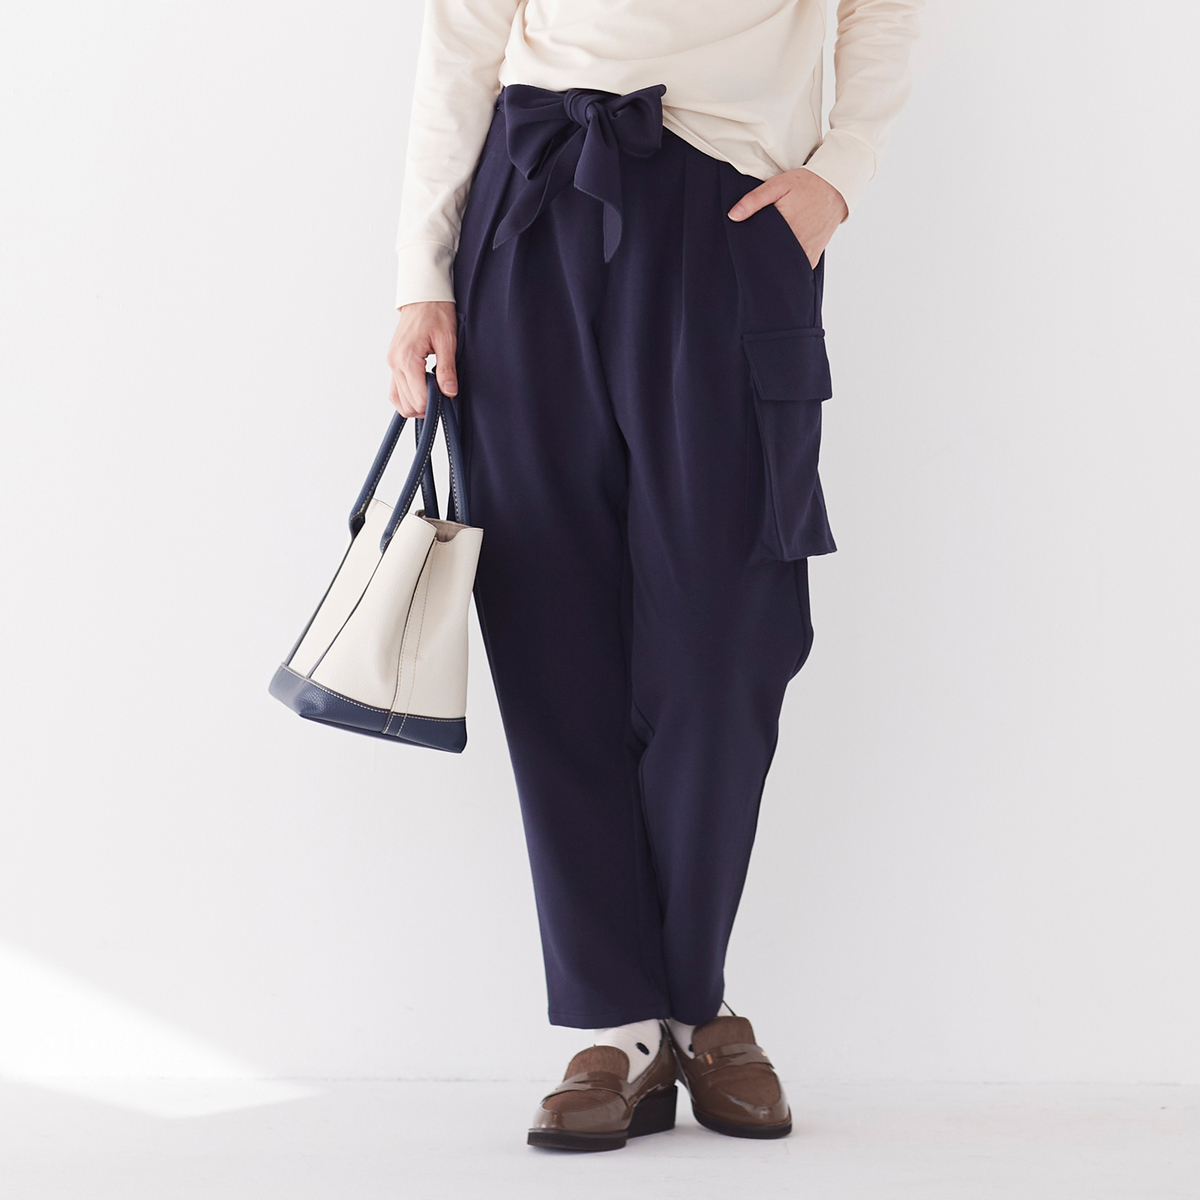 kawai okada デザインパンツ スカート付き 動きやすい 体型カバー-